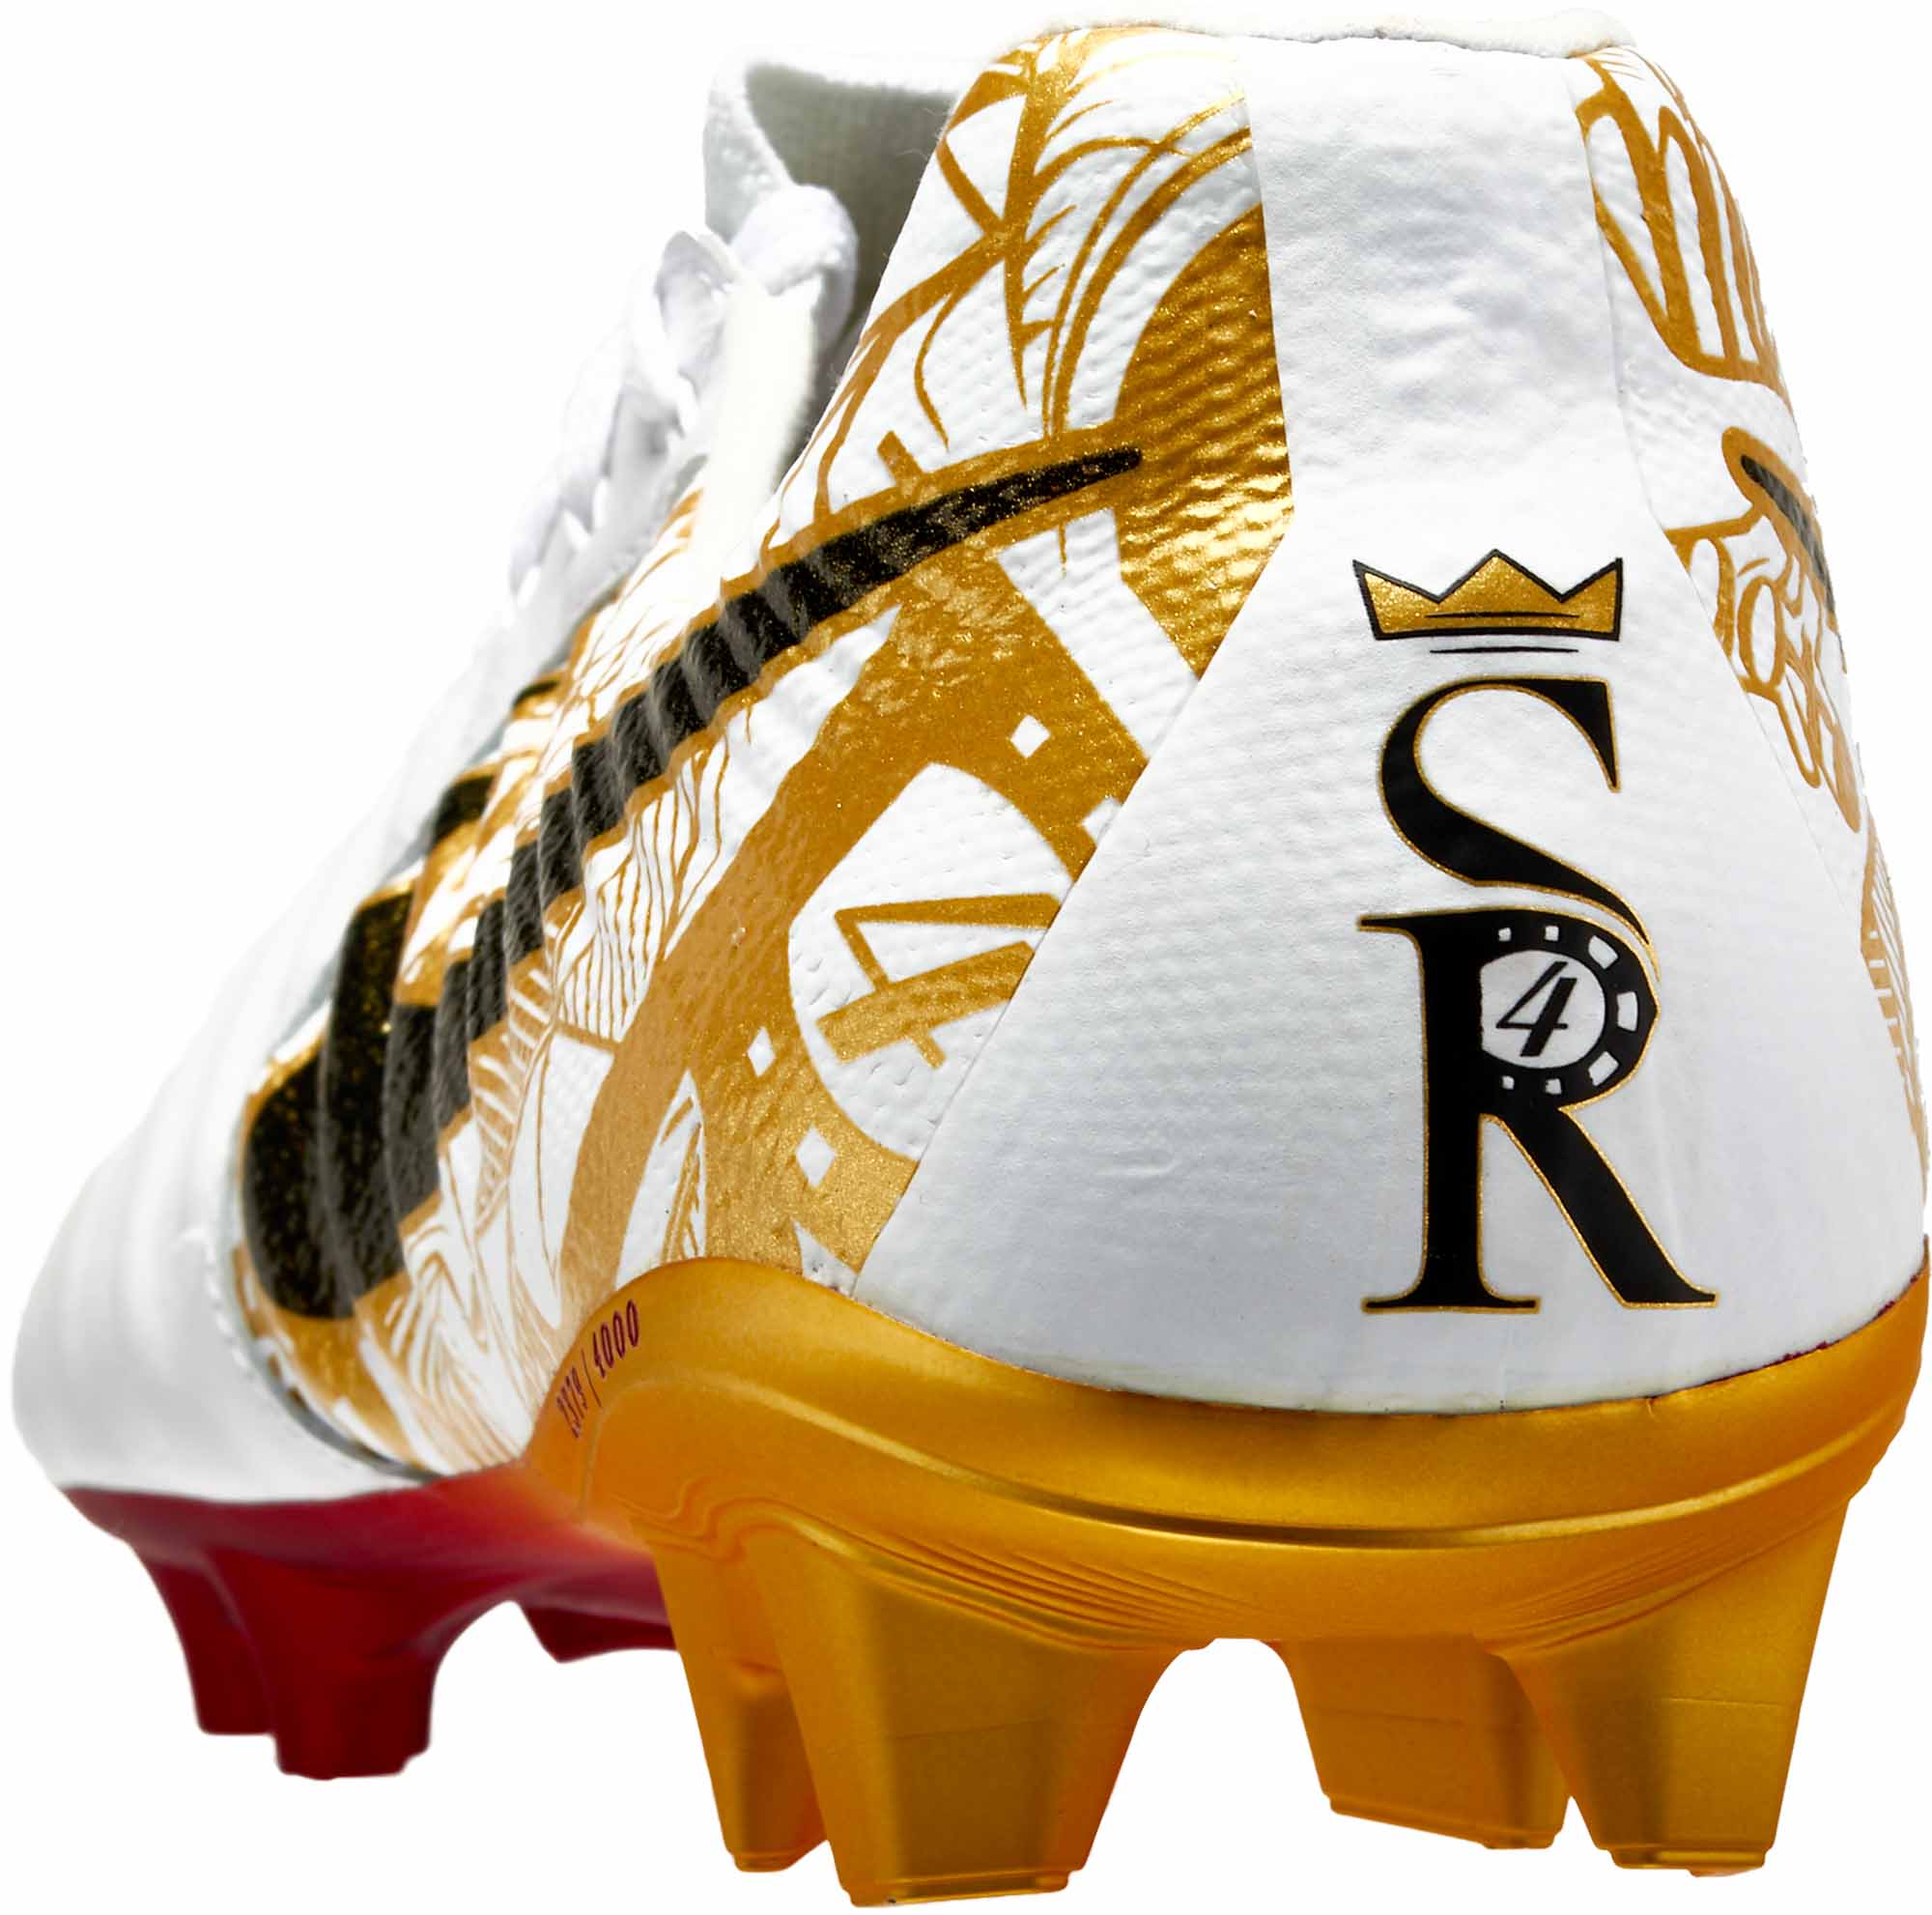 Nike Tiempo Legend VII SE FG Sergio Ramos - White & Metallic Vivid Gold - Soccer